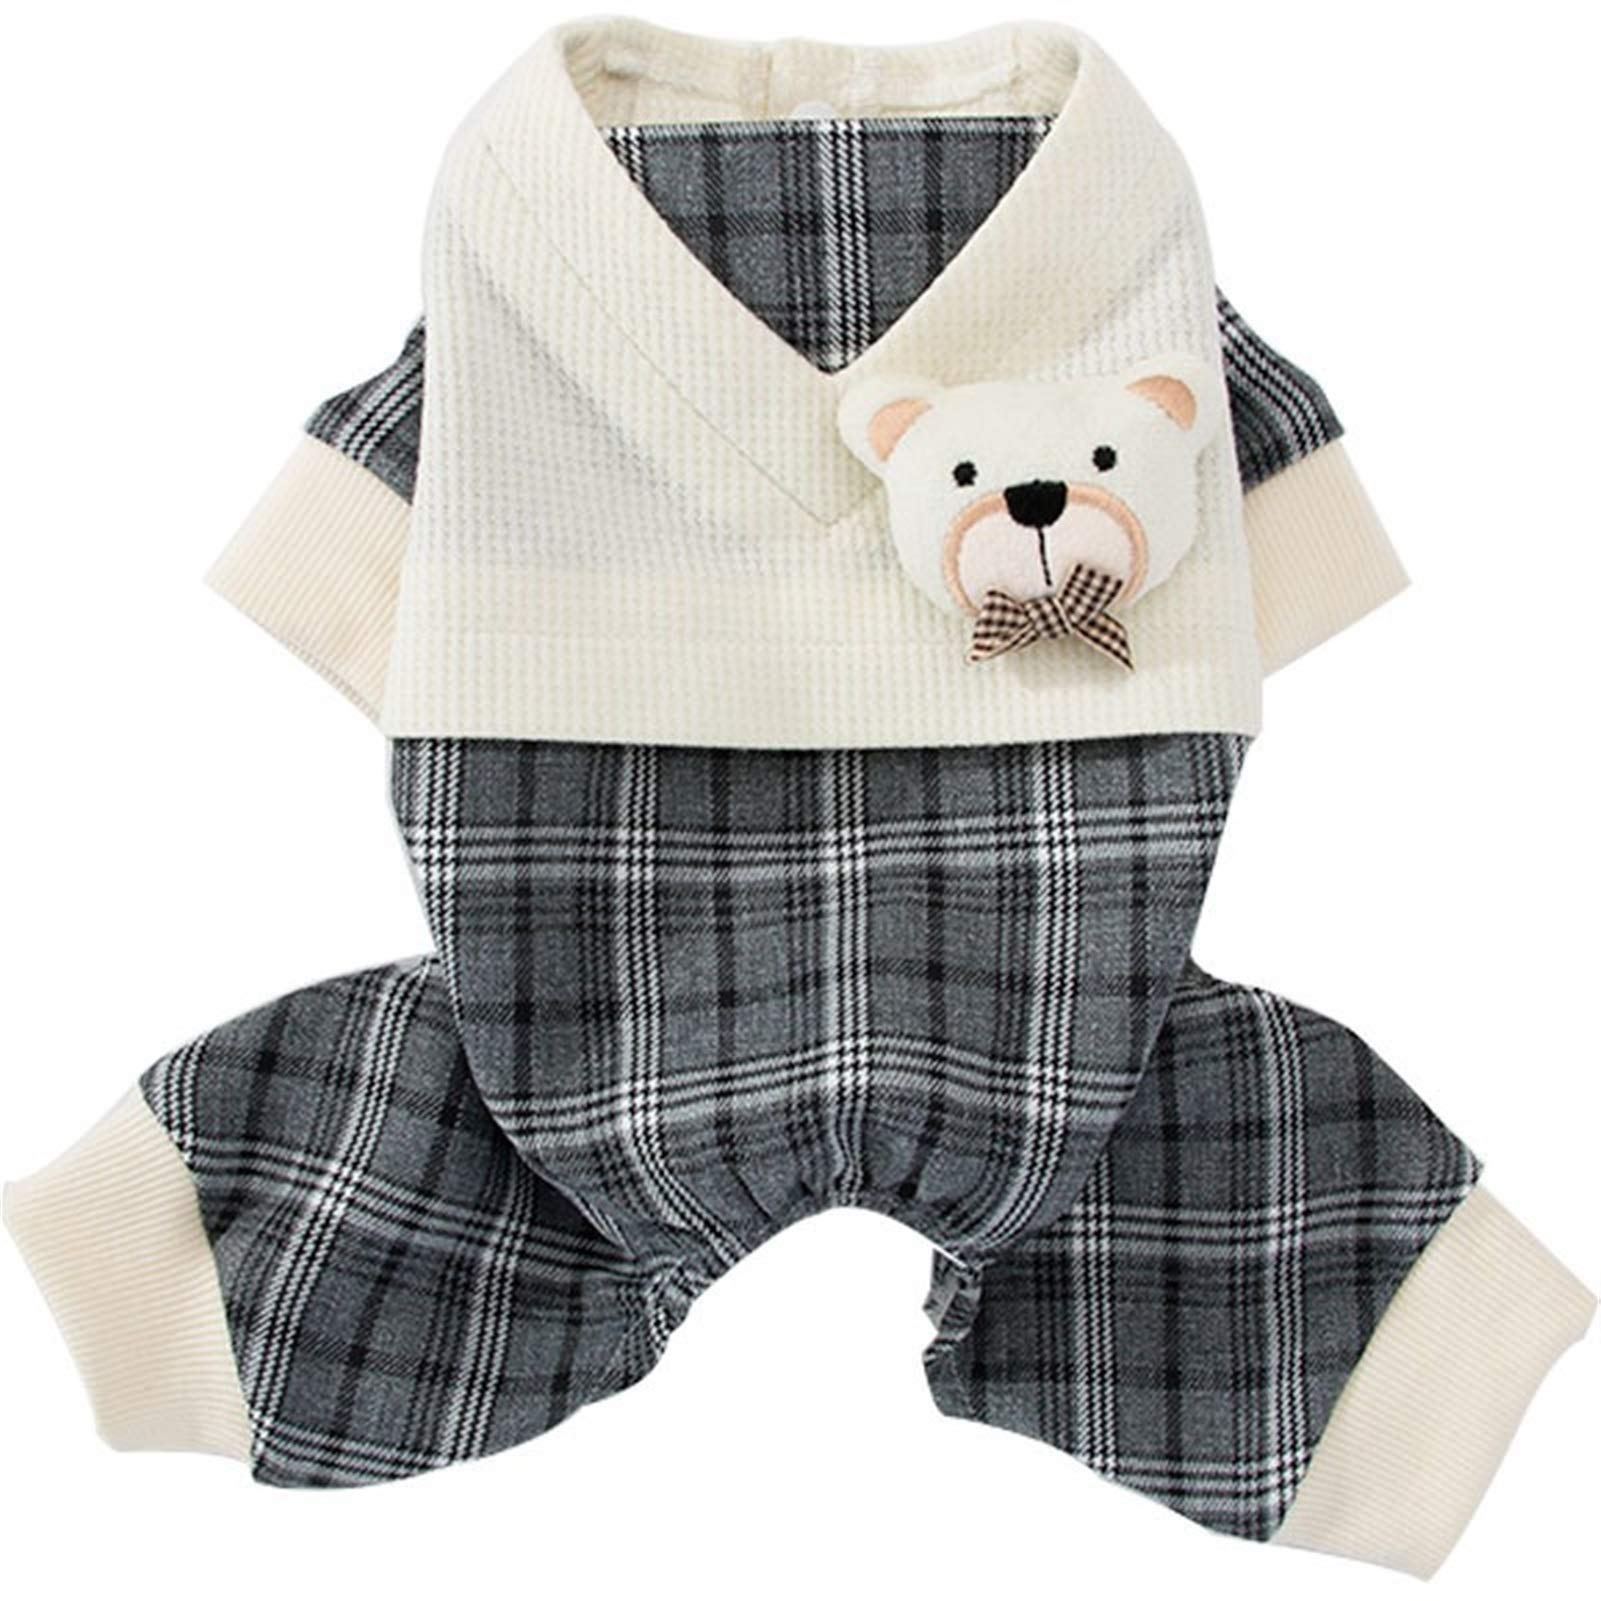 MMAWN Nette warme Hundekleidung für kleine Hunde Winter Baumwolle Hundekleidung Mantel Welpen Kostüm Pullover Mantel Chihuahua Outfits Ropa (Size : X-Small)